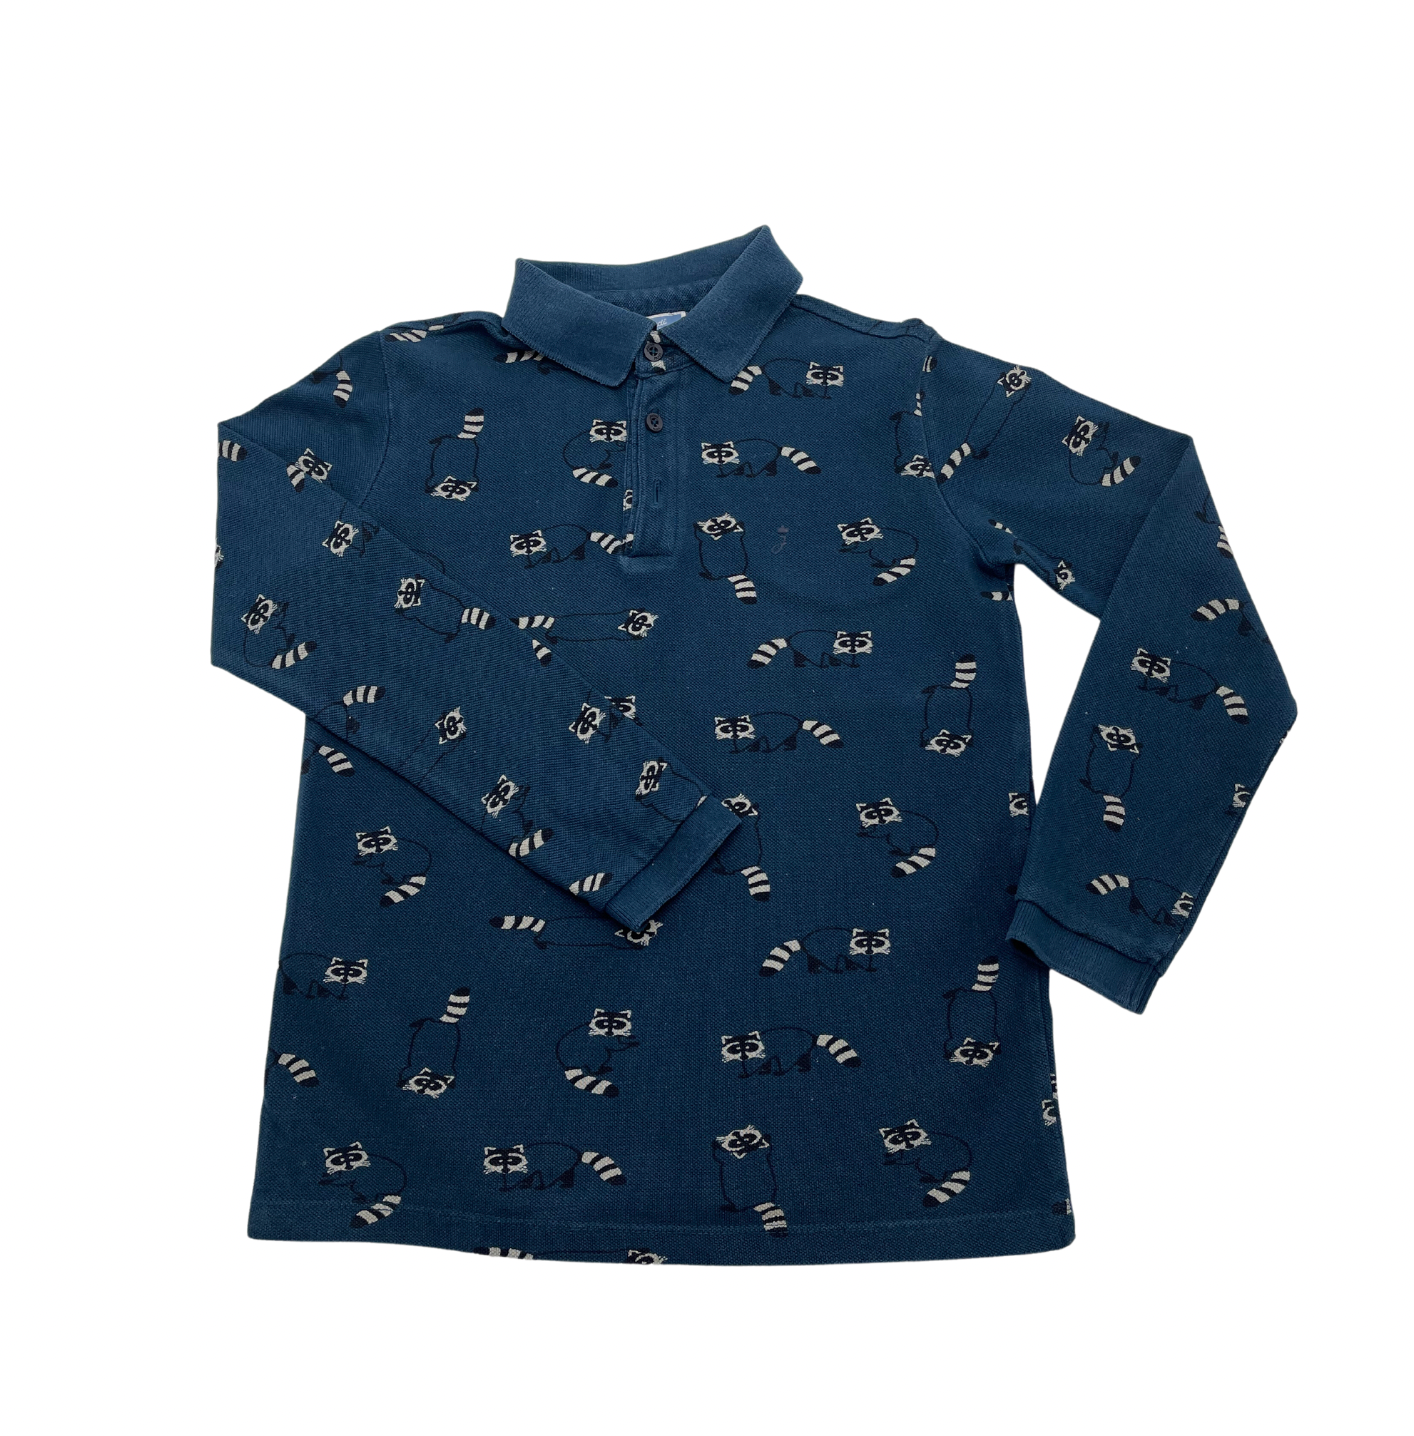 JACADI - Polo bleu motifs animaux - 8 ans